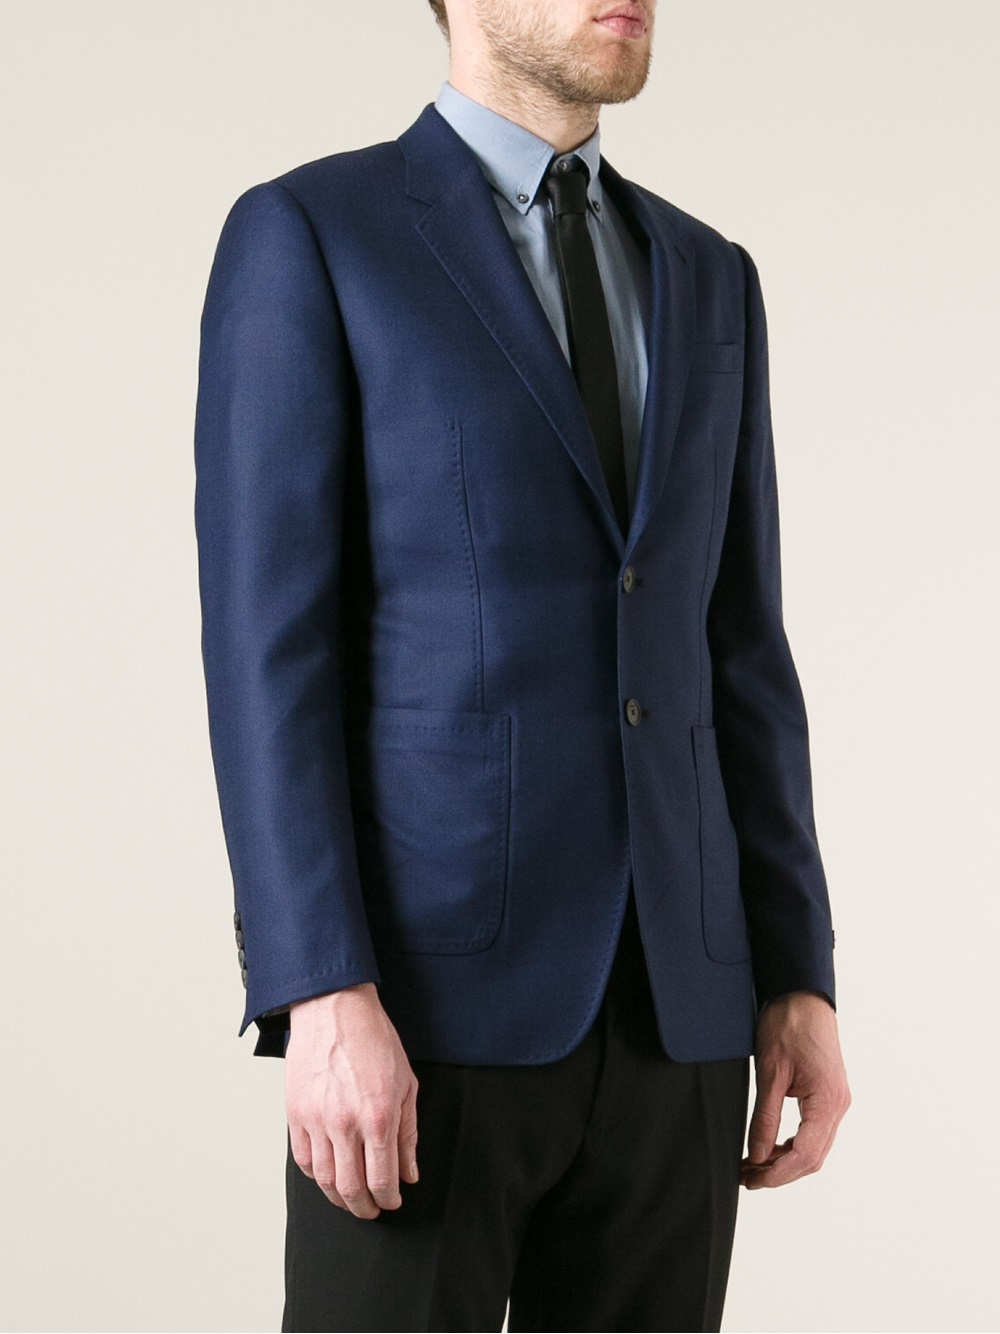 Paul Smith Byard Tailored Jacket in Blue for Men - Lyst